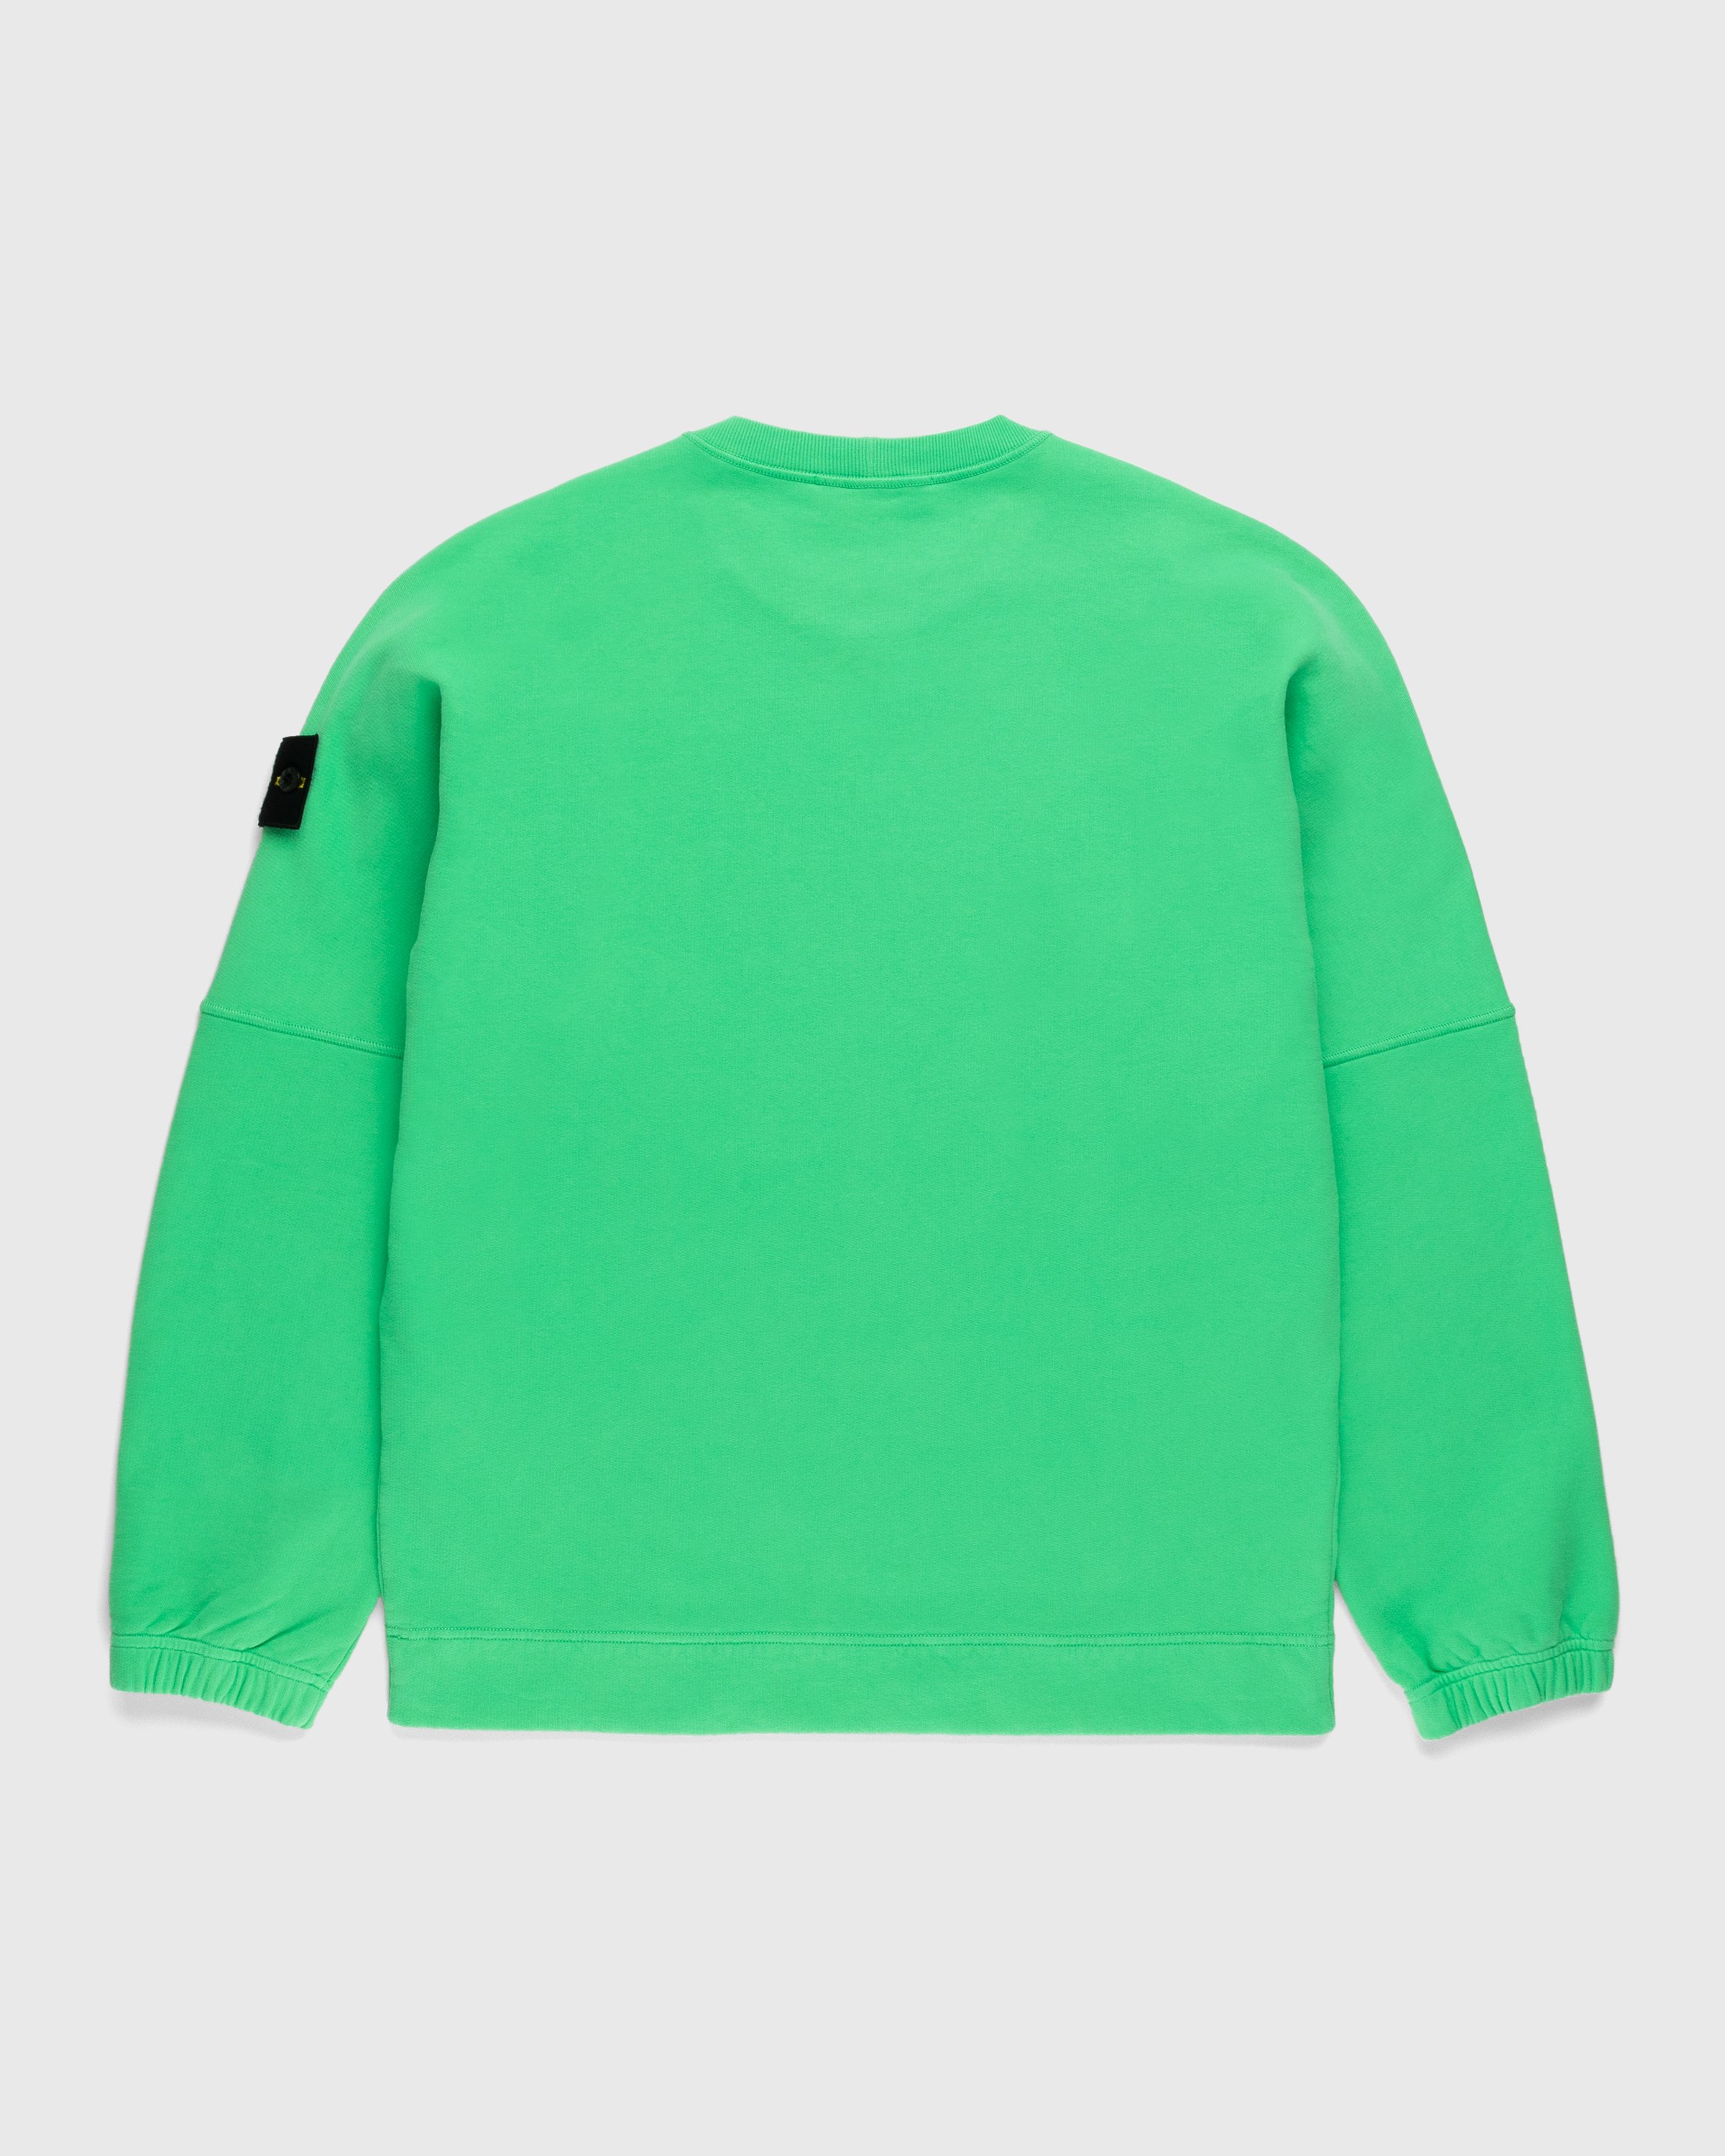 Stone Island - Garment-Dyed Fleece Crewneck Sweatshirt Light Green - Clothing - Green - Image 2